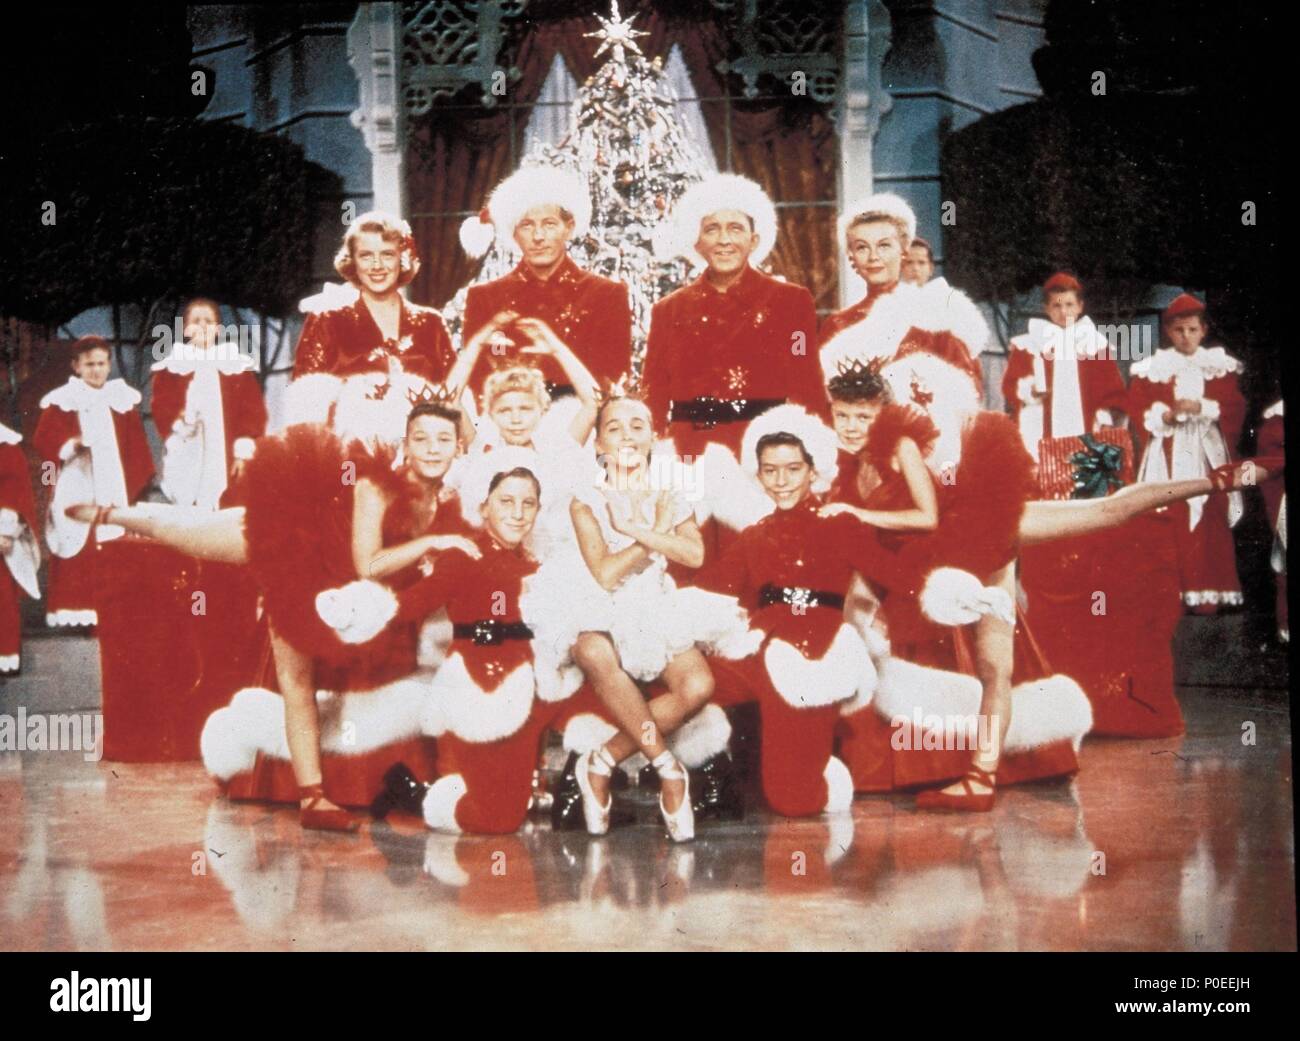 Original Film Title: WHITE CHRISTMAS.  English Title: WHITE CHRISTMAS.  Film Director: MICHAEL CURTIZ.  Year: 1954.  Stars: BING CROSBY; VERA-ELLEN; DANNY KAYE; ROSEMARY CLOONEY. Credit: PARAMOUNT PICTURES / Album Stock Photo